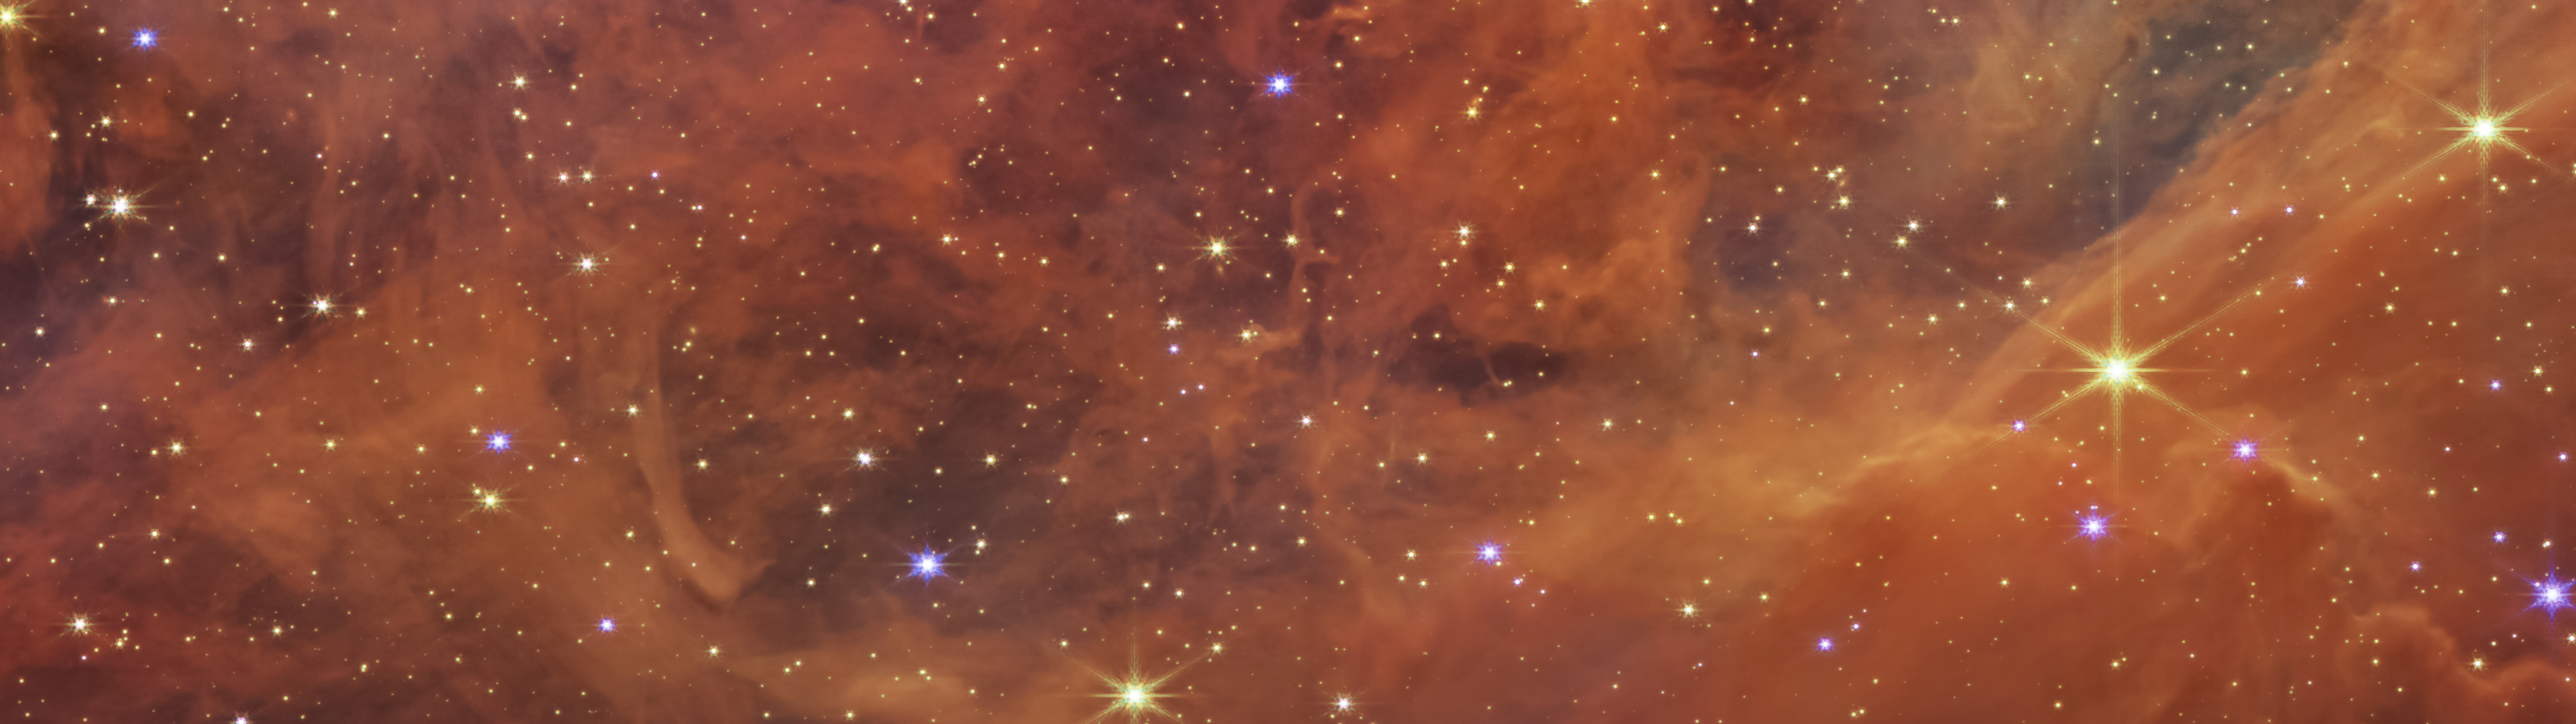 General 5120x1440 space James Webb Space Telescope nebula Carina Nebula NASA infrared stars NGC 3324